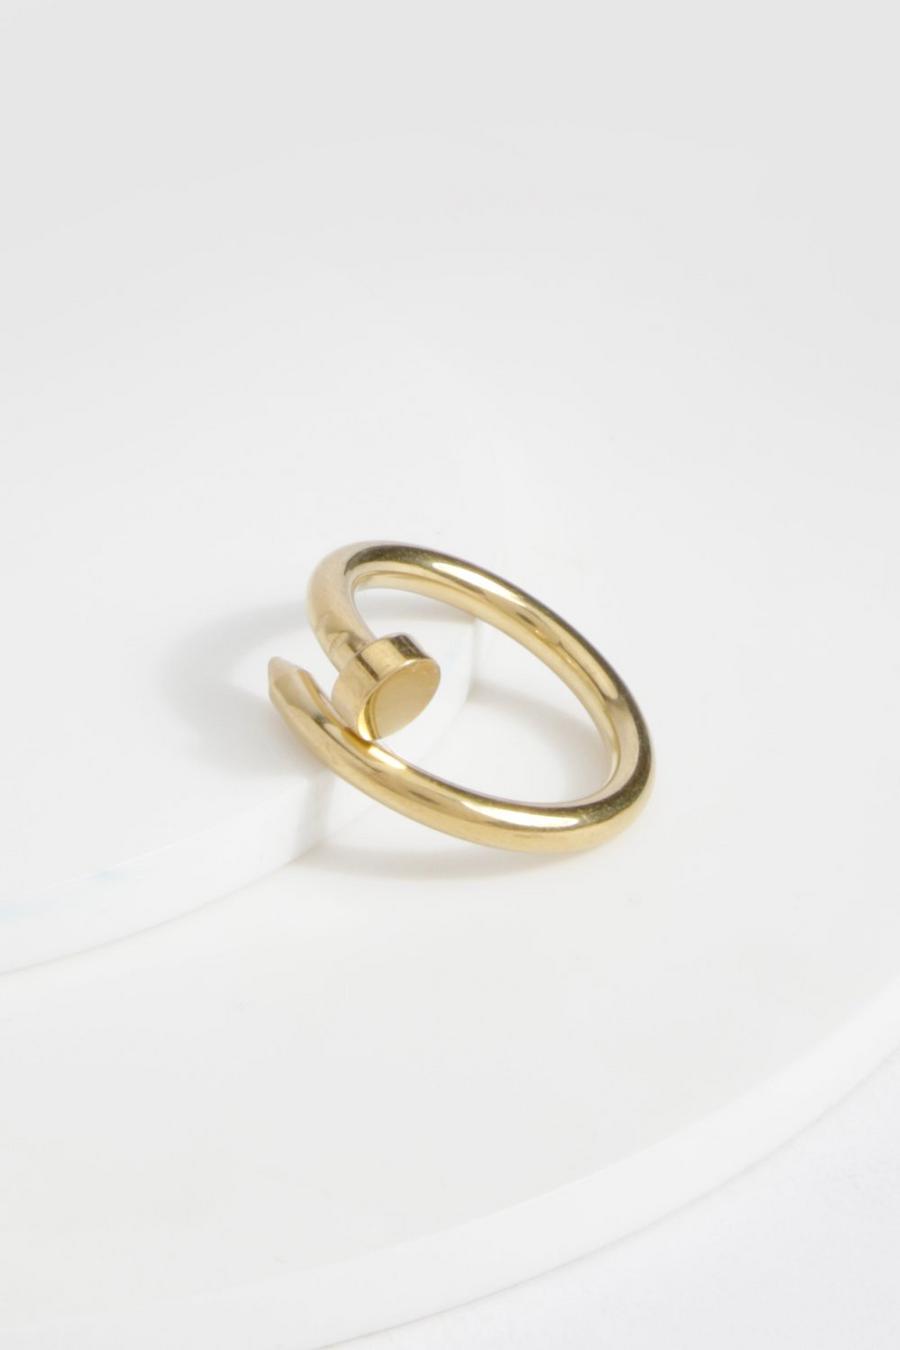 Gold Waterbestendige Ring Met Schroef Detail